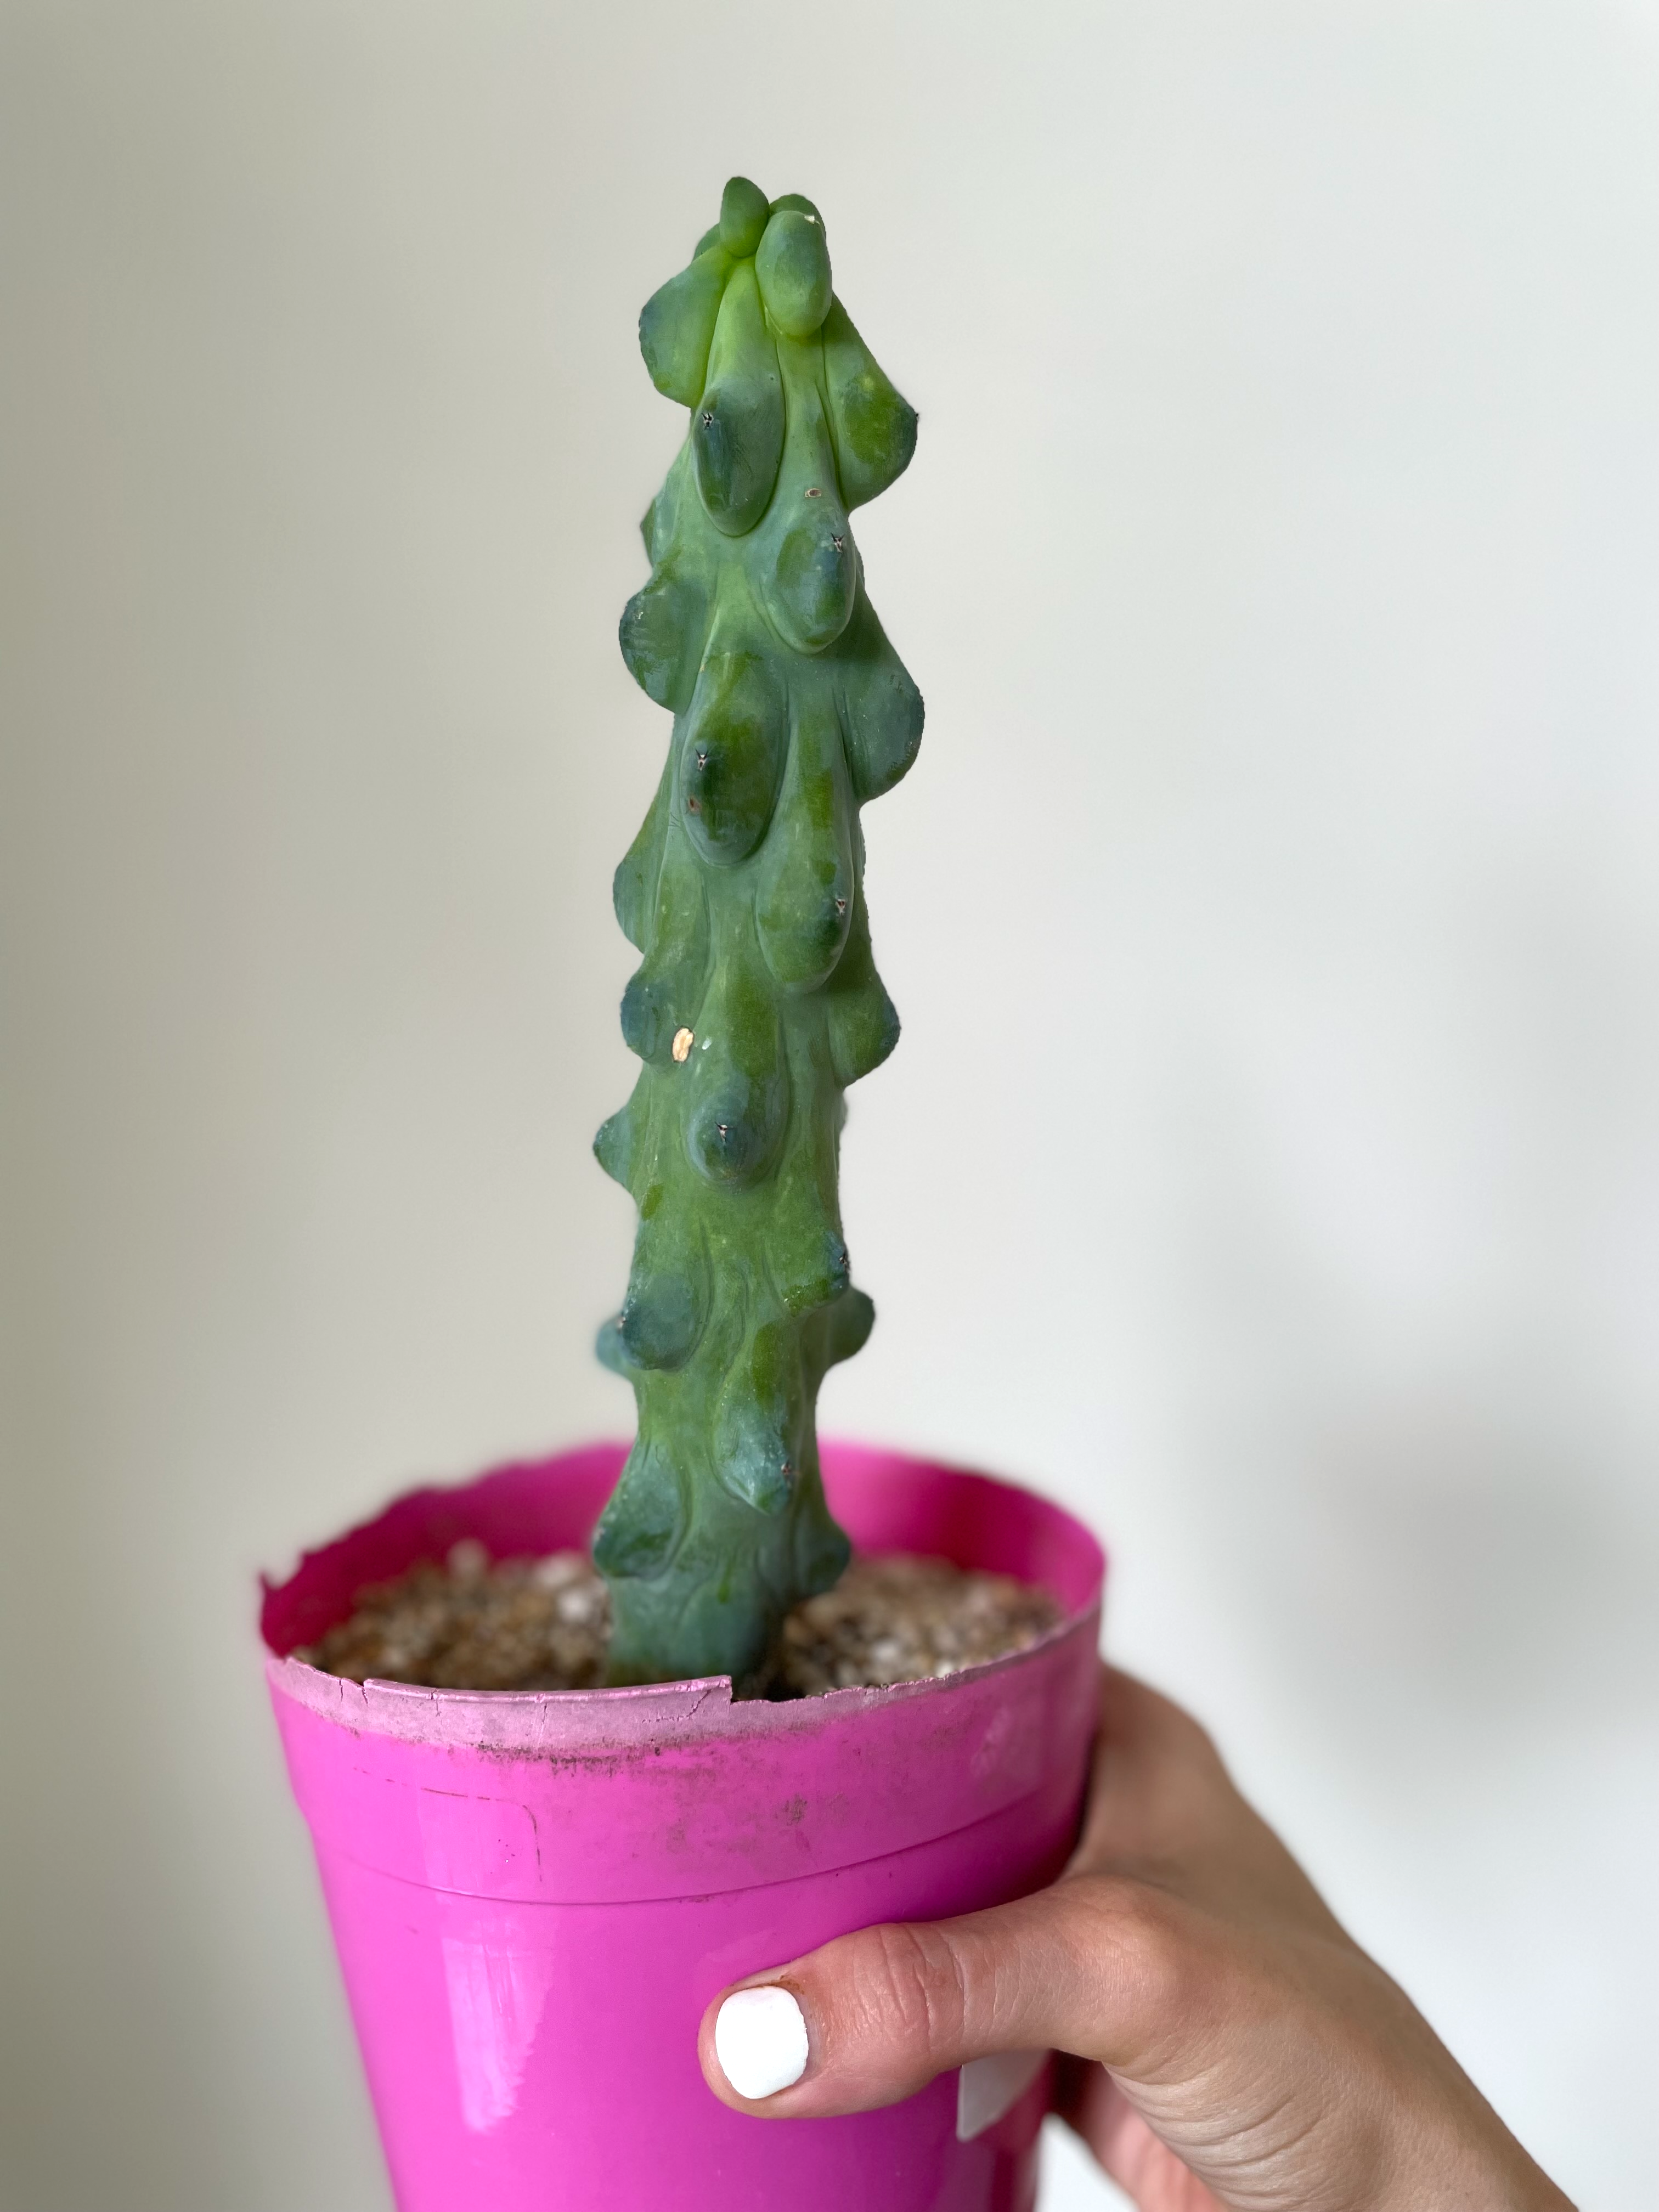 Myrtillocactus Geometrizans Fukurokuryuzinboku 'Boobie' Cactus